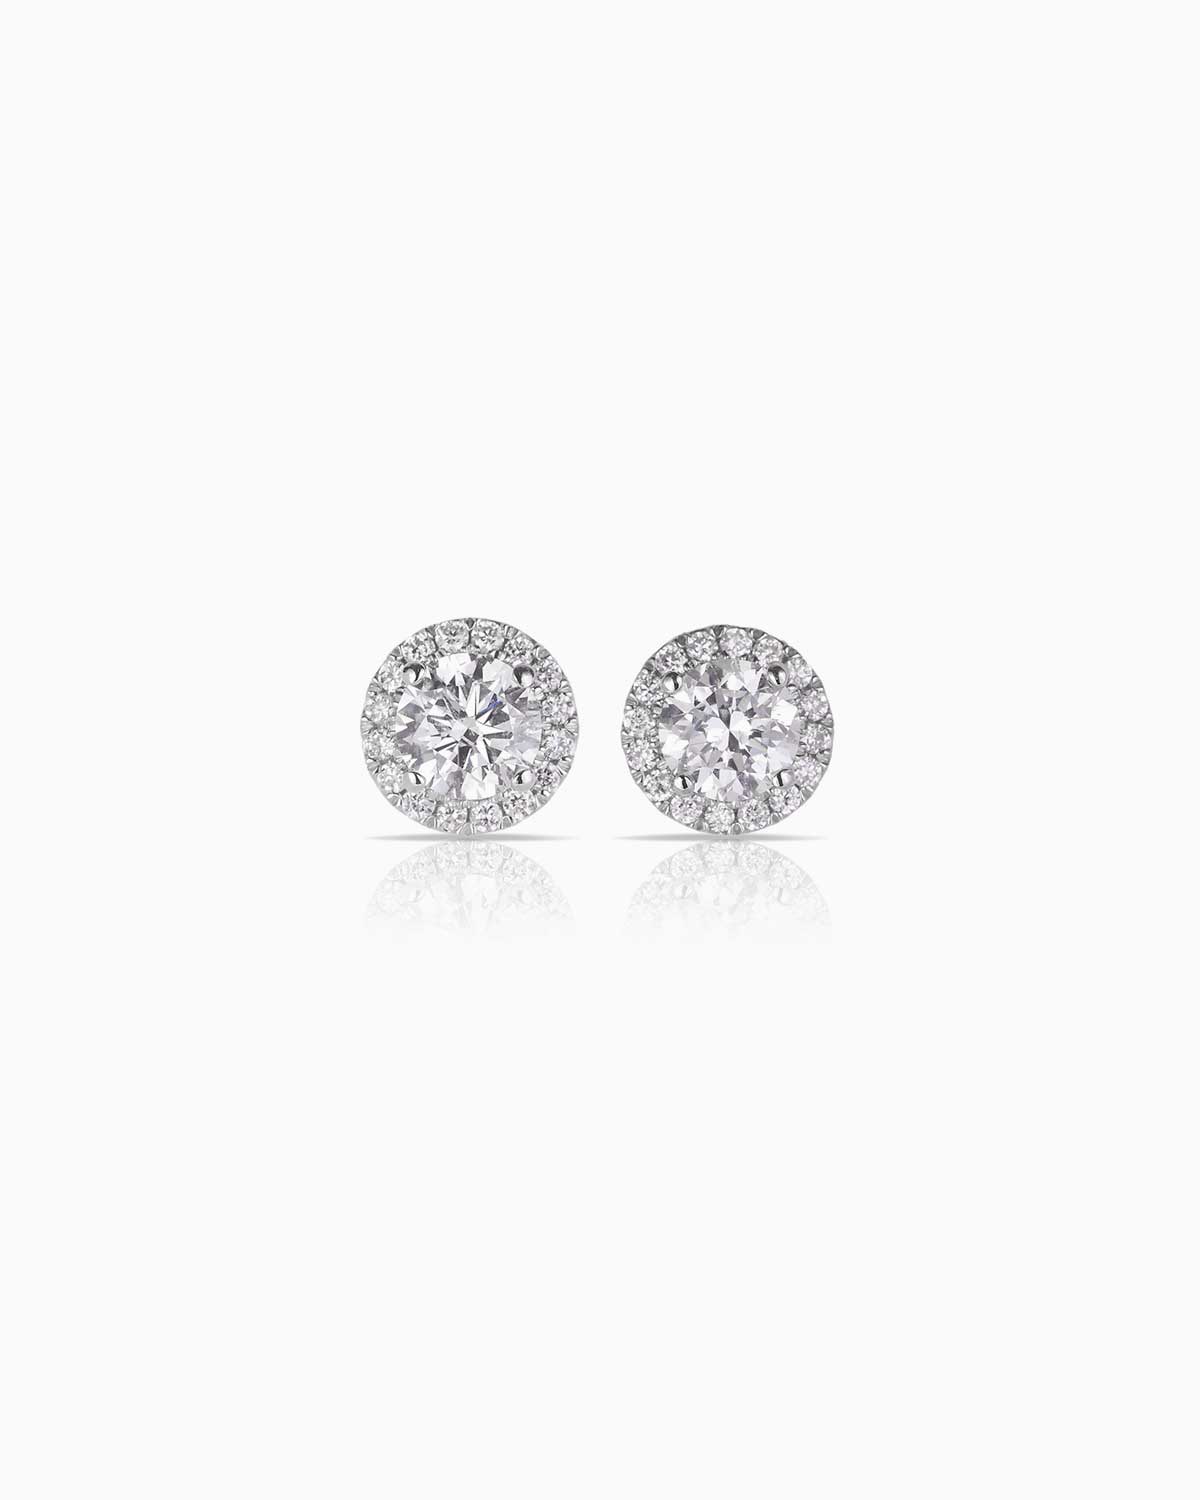 Halo diamond earrings set in 18 karat white gold